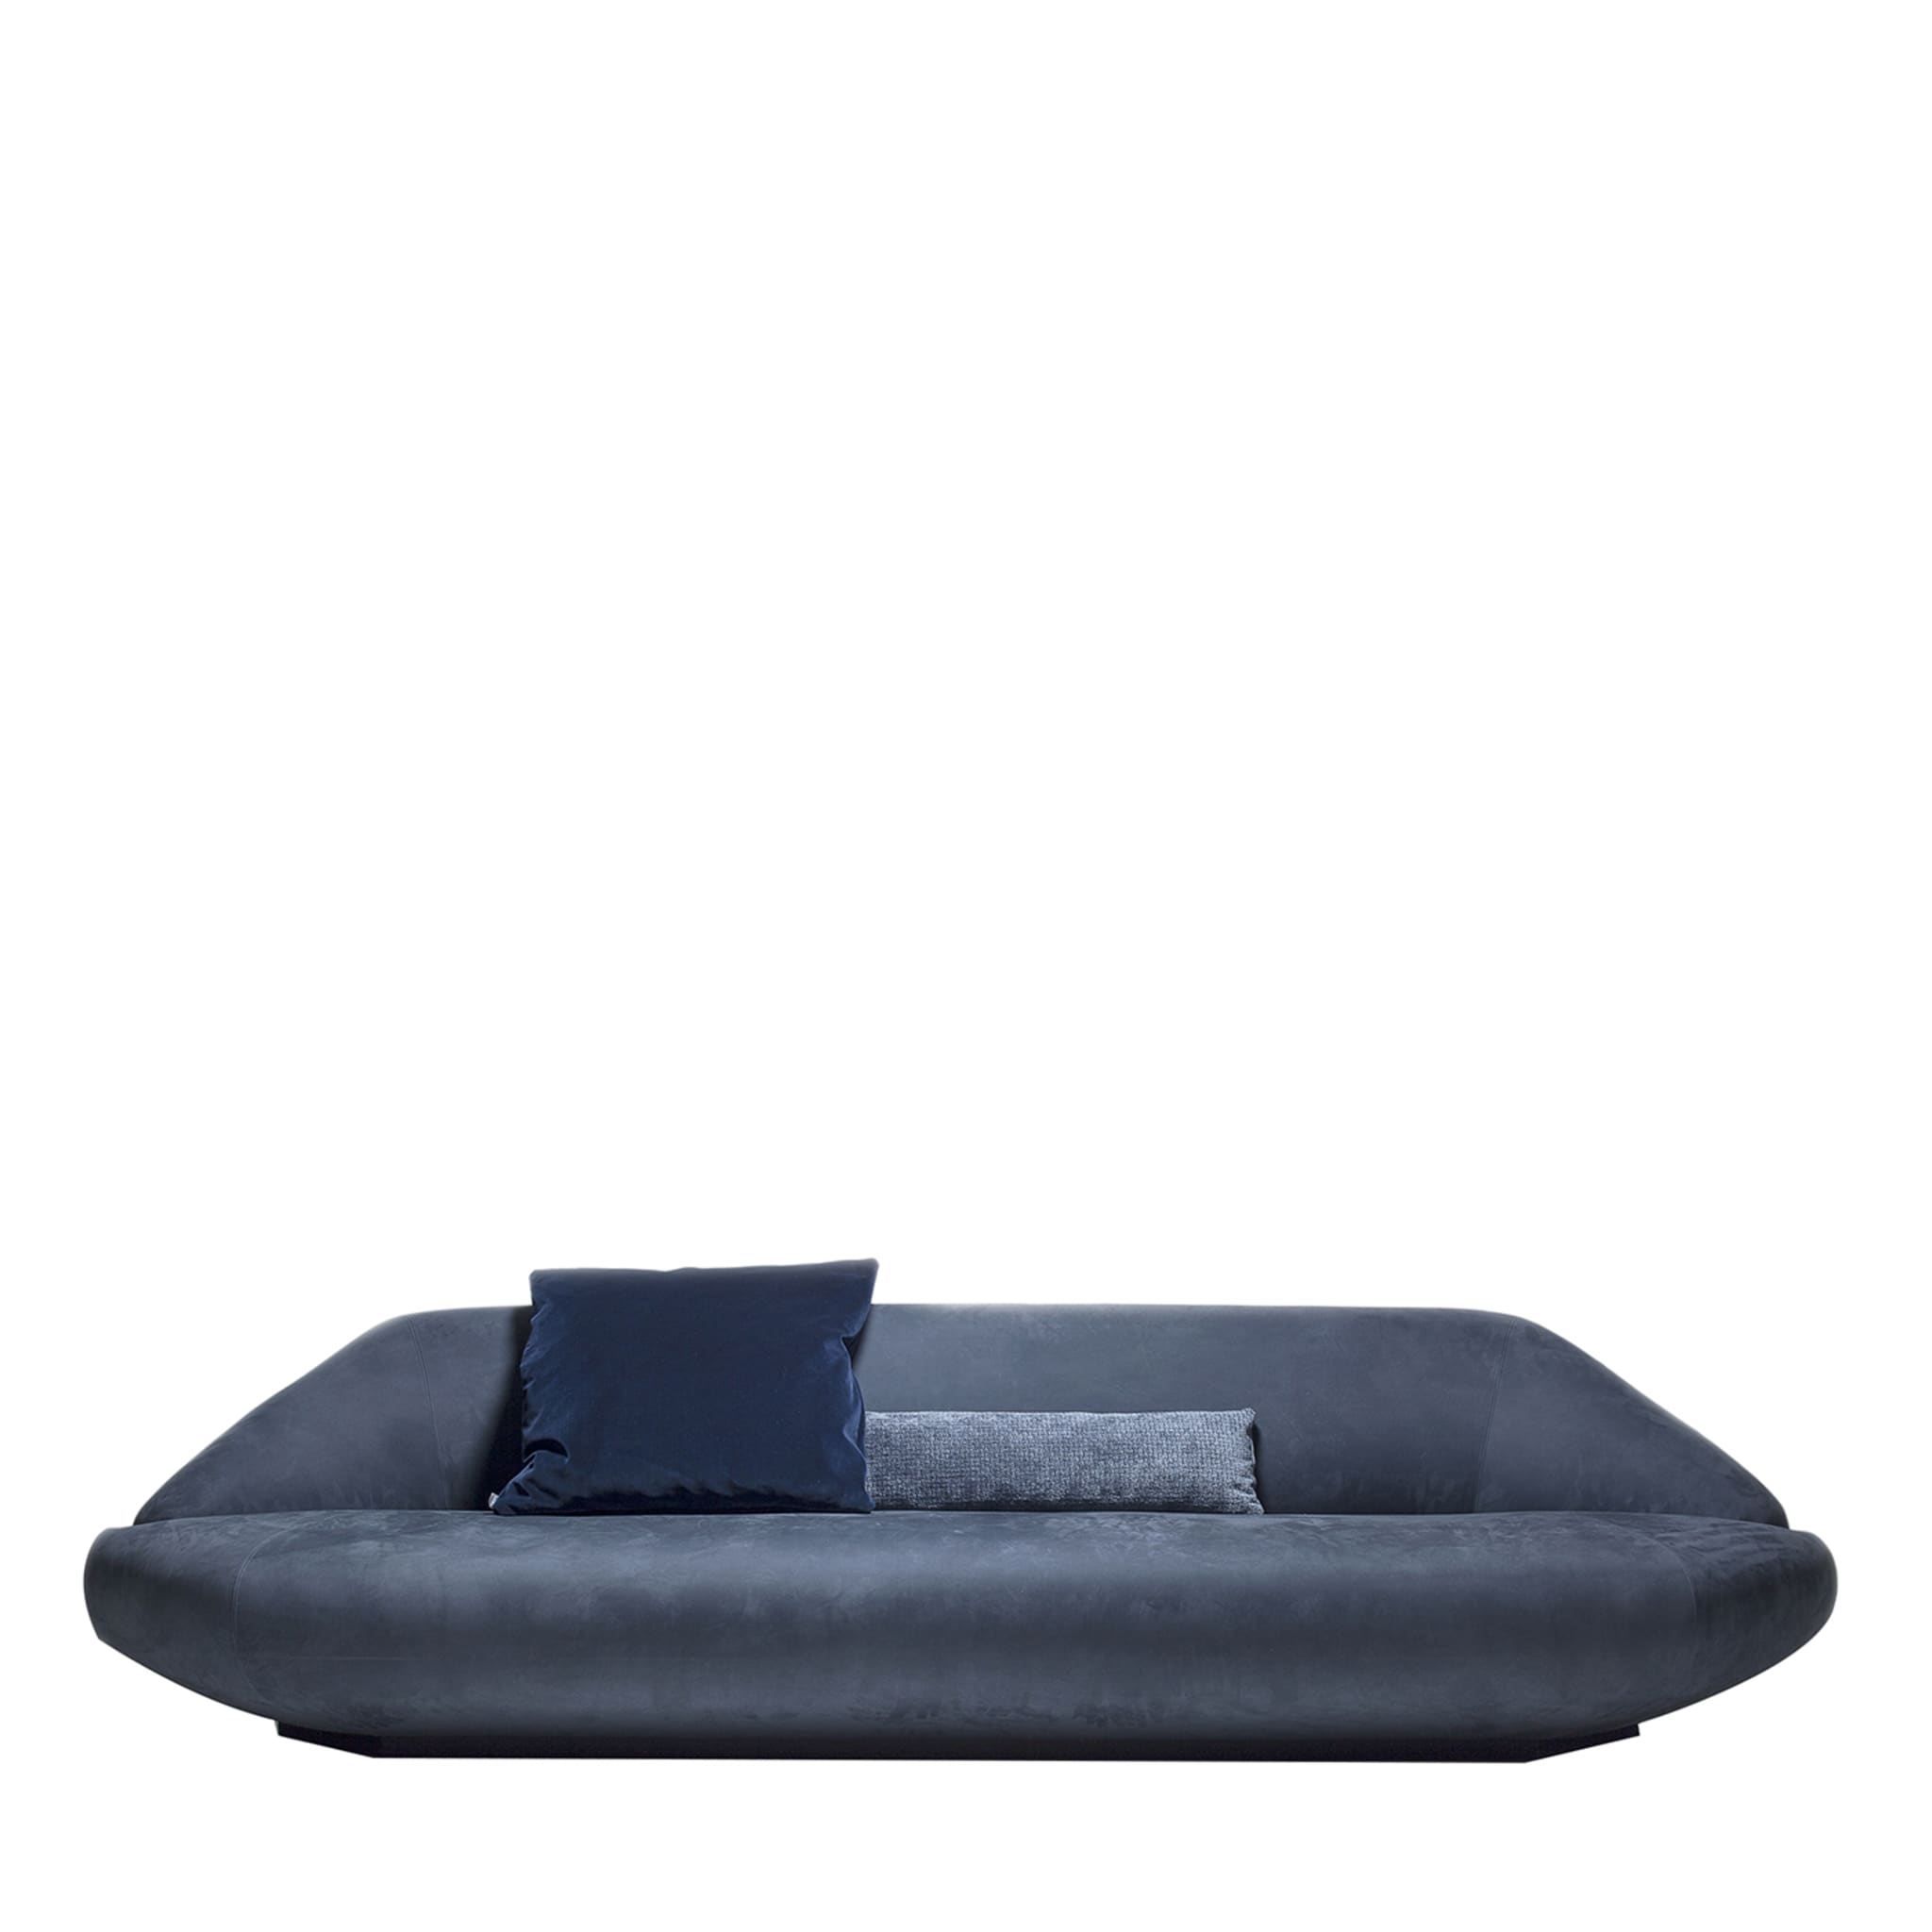 Bolid Blue Sofa by Gianluigi Landoni - Main view